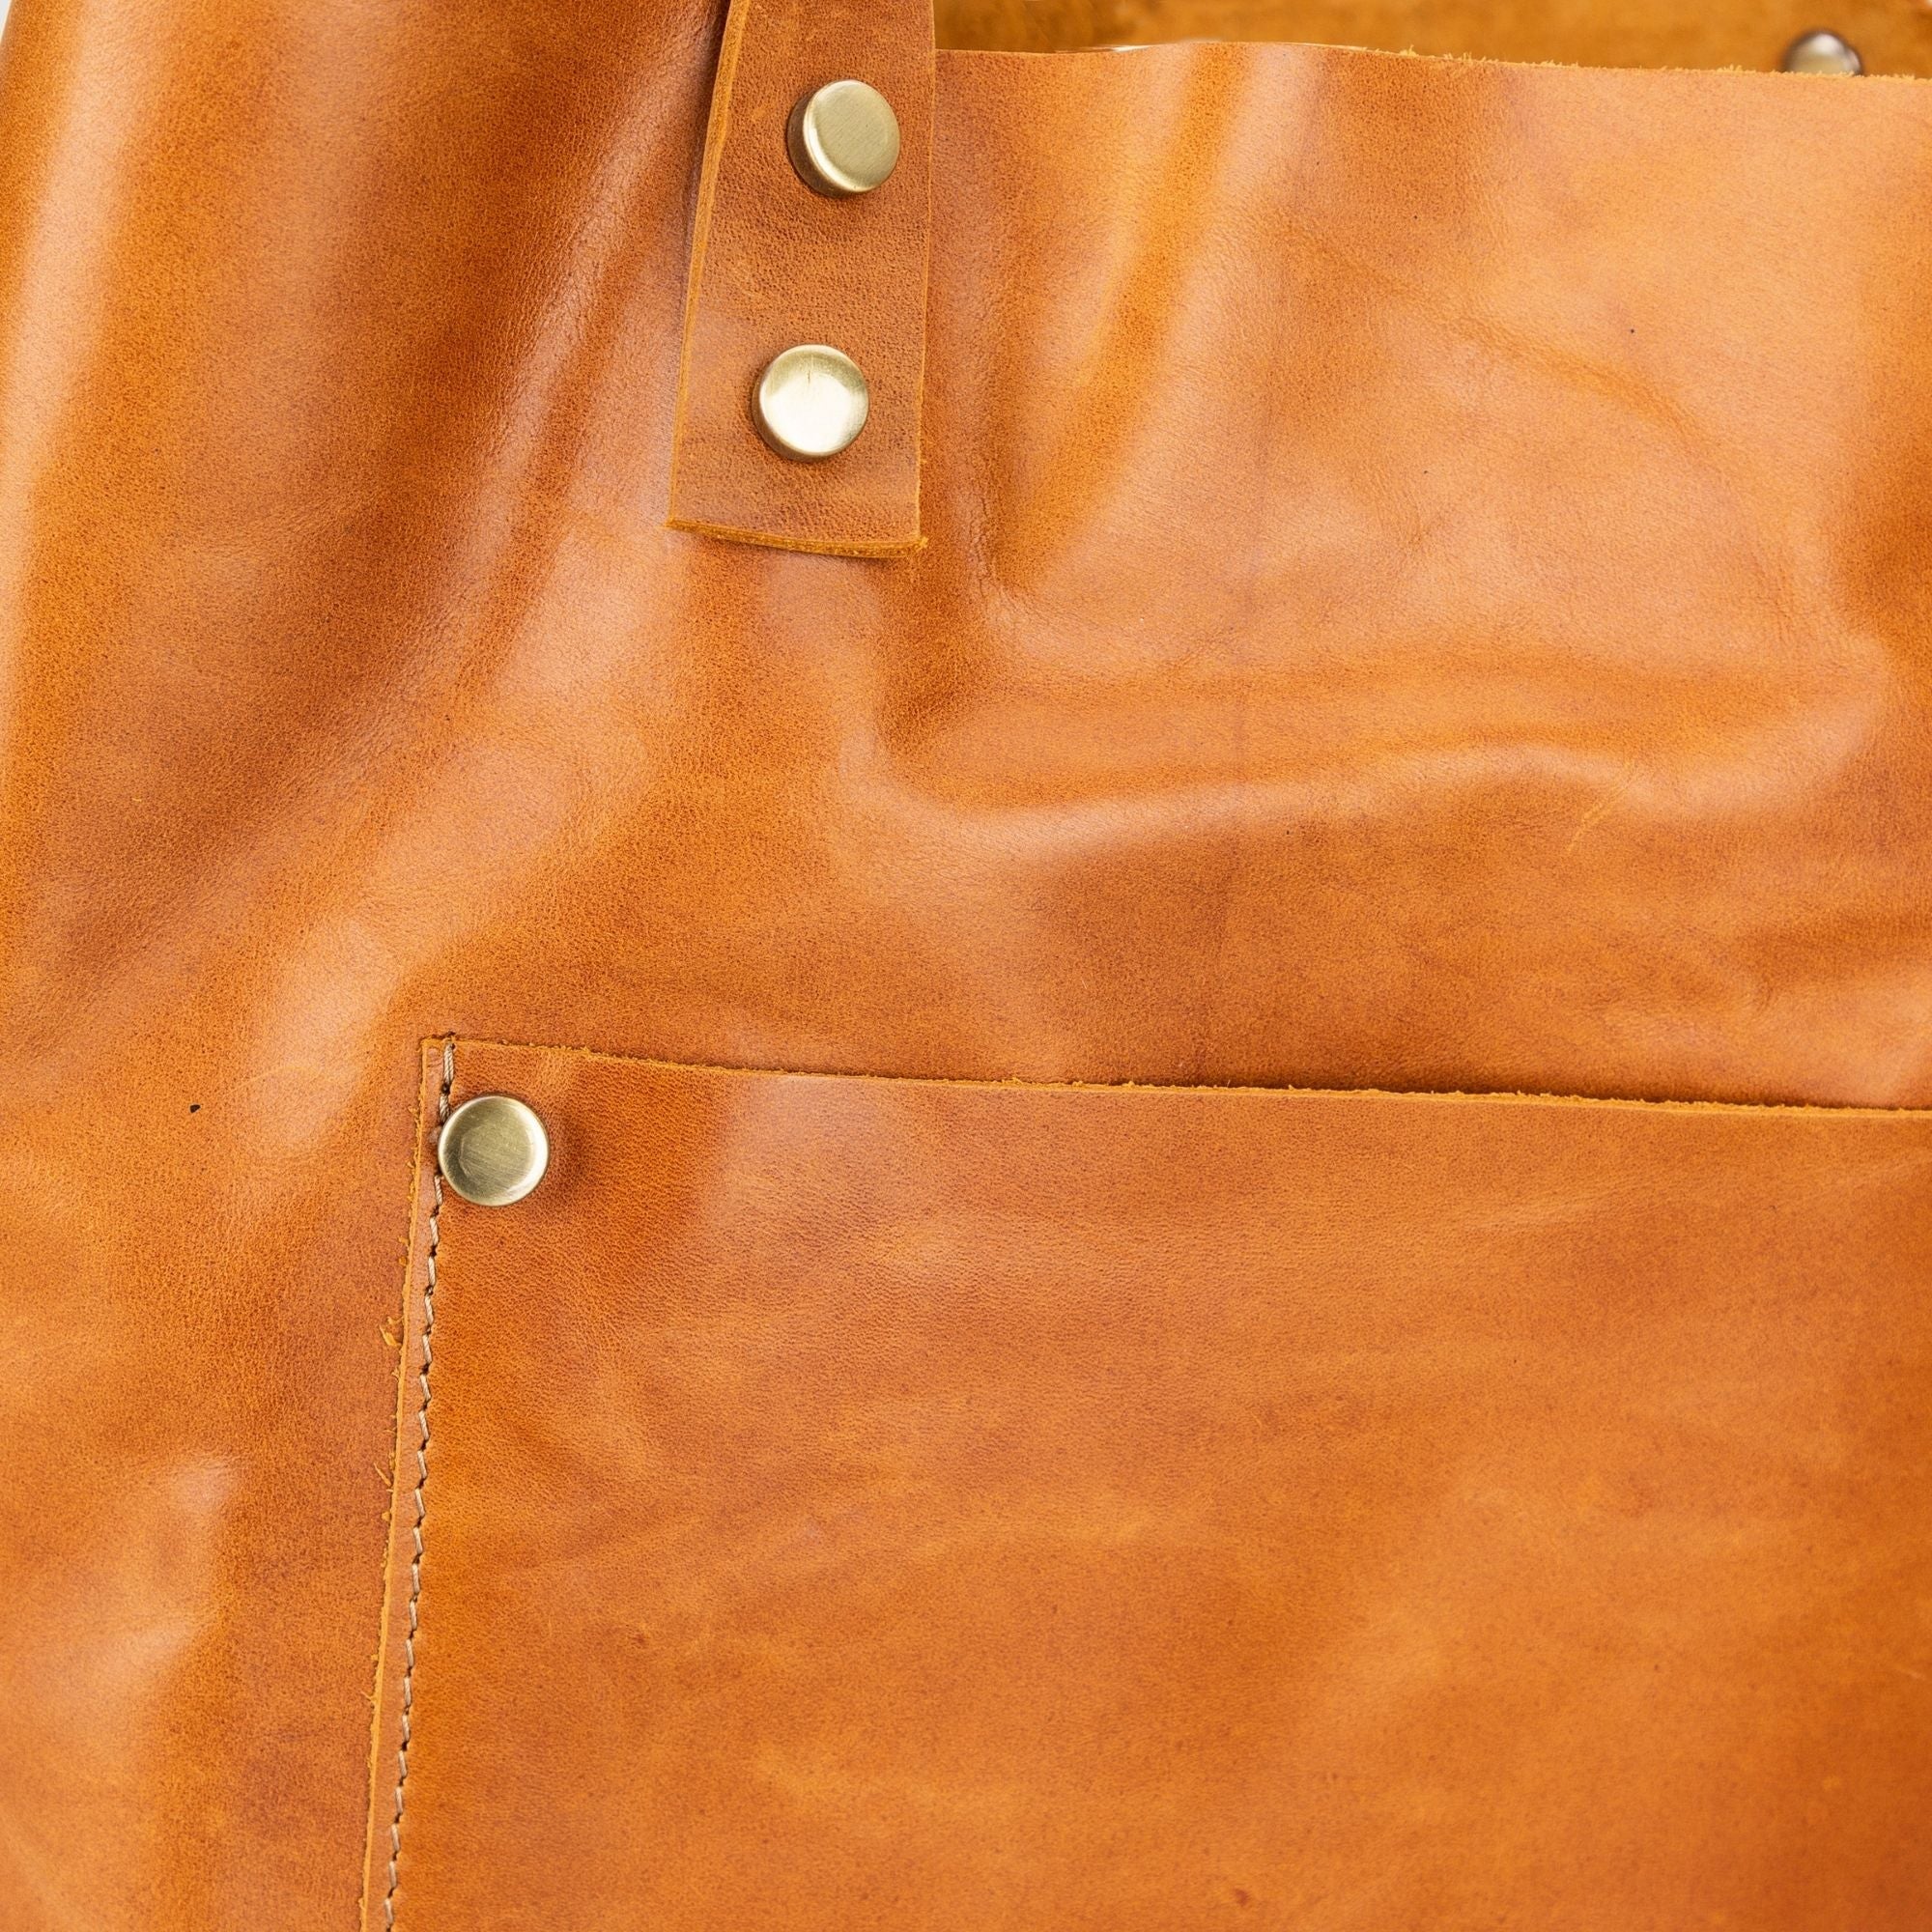 Alpine Leather Crossbody Handbag (Tote Bag) for Women - L - Tan - TORONATA